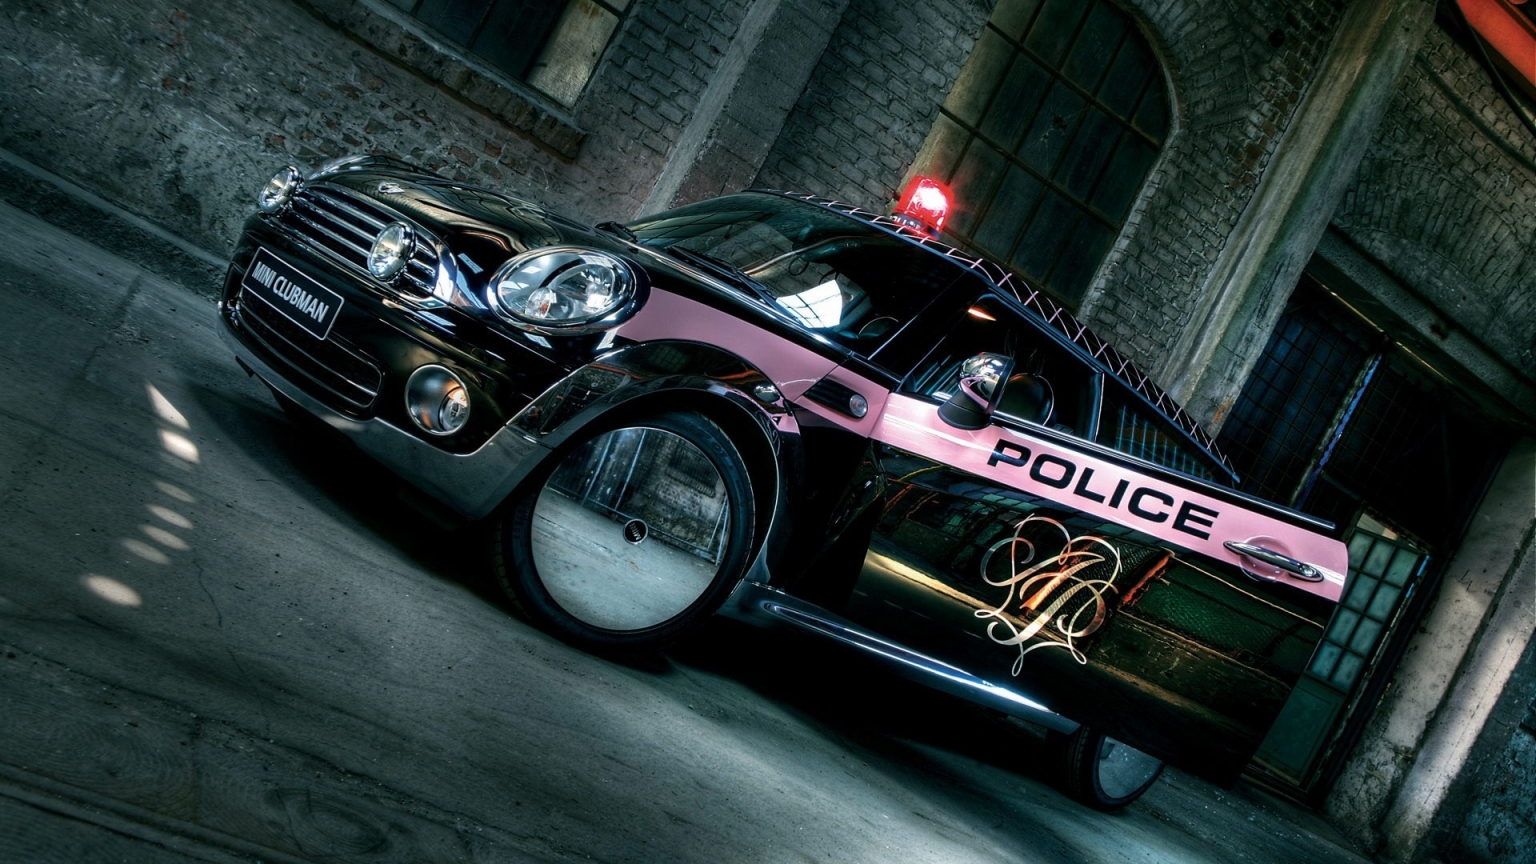 Mini Police Car for 1536 x 864 HDTV resolution